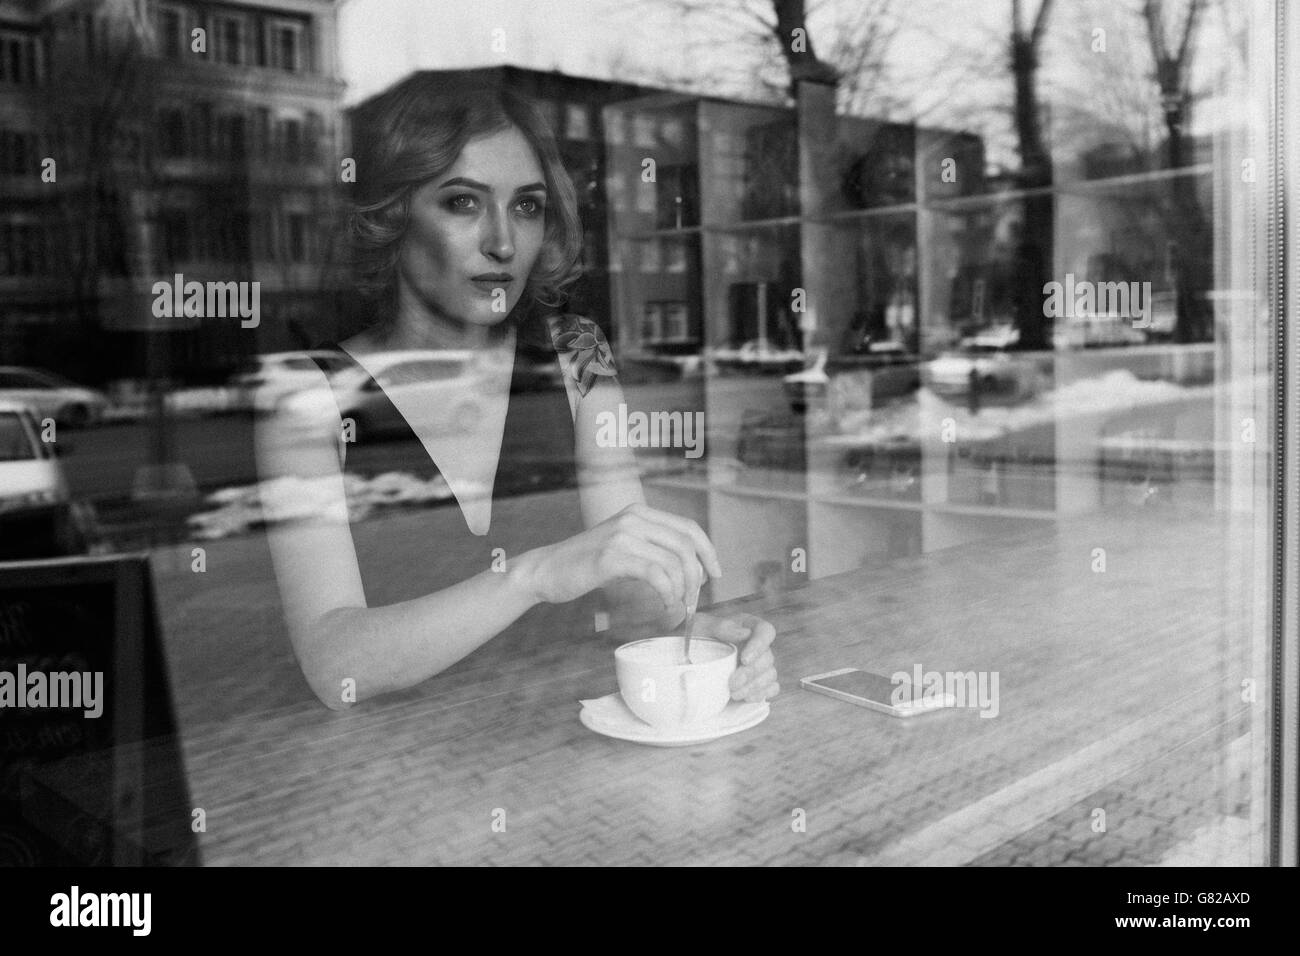 Thoughtful young woman stirring coffee in coffee shop Stock Photo